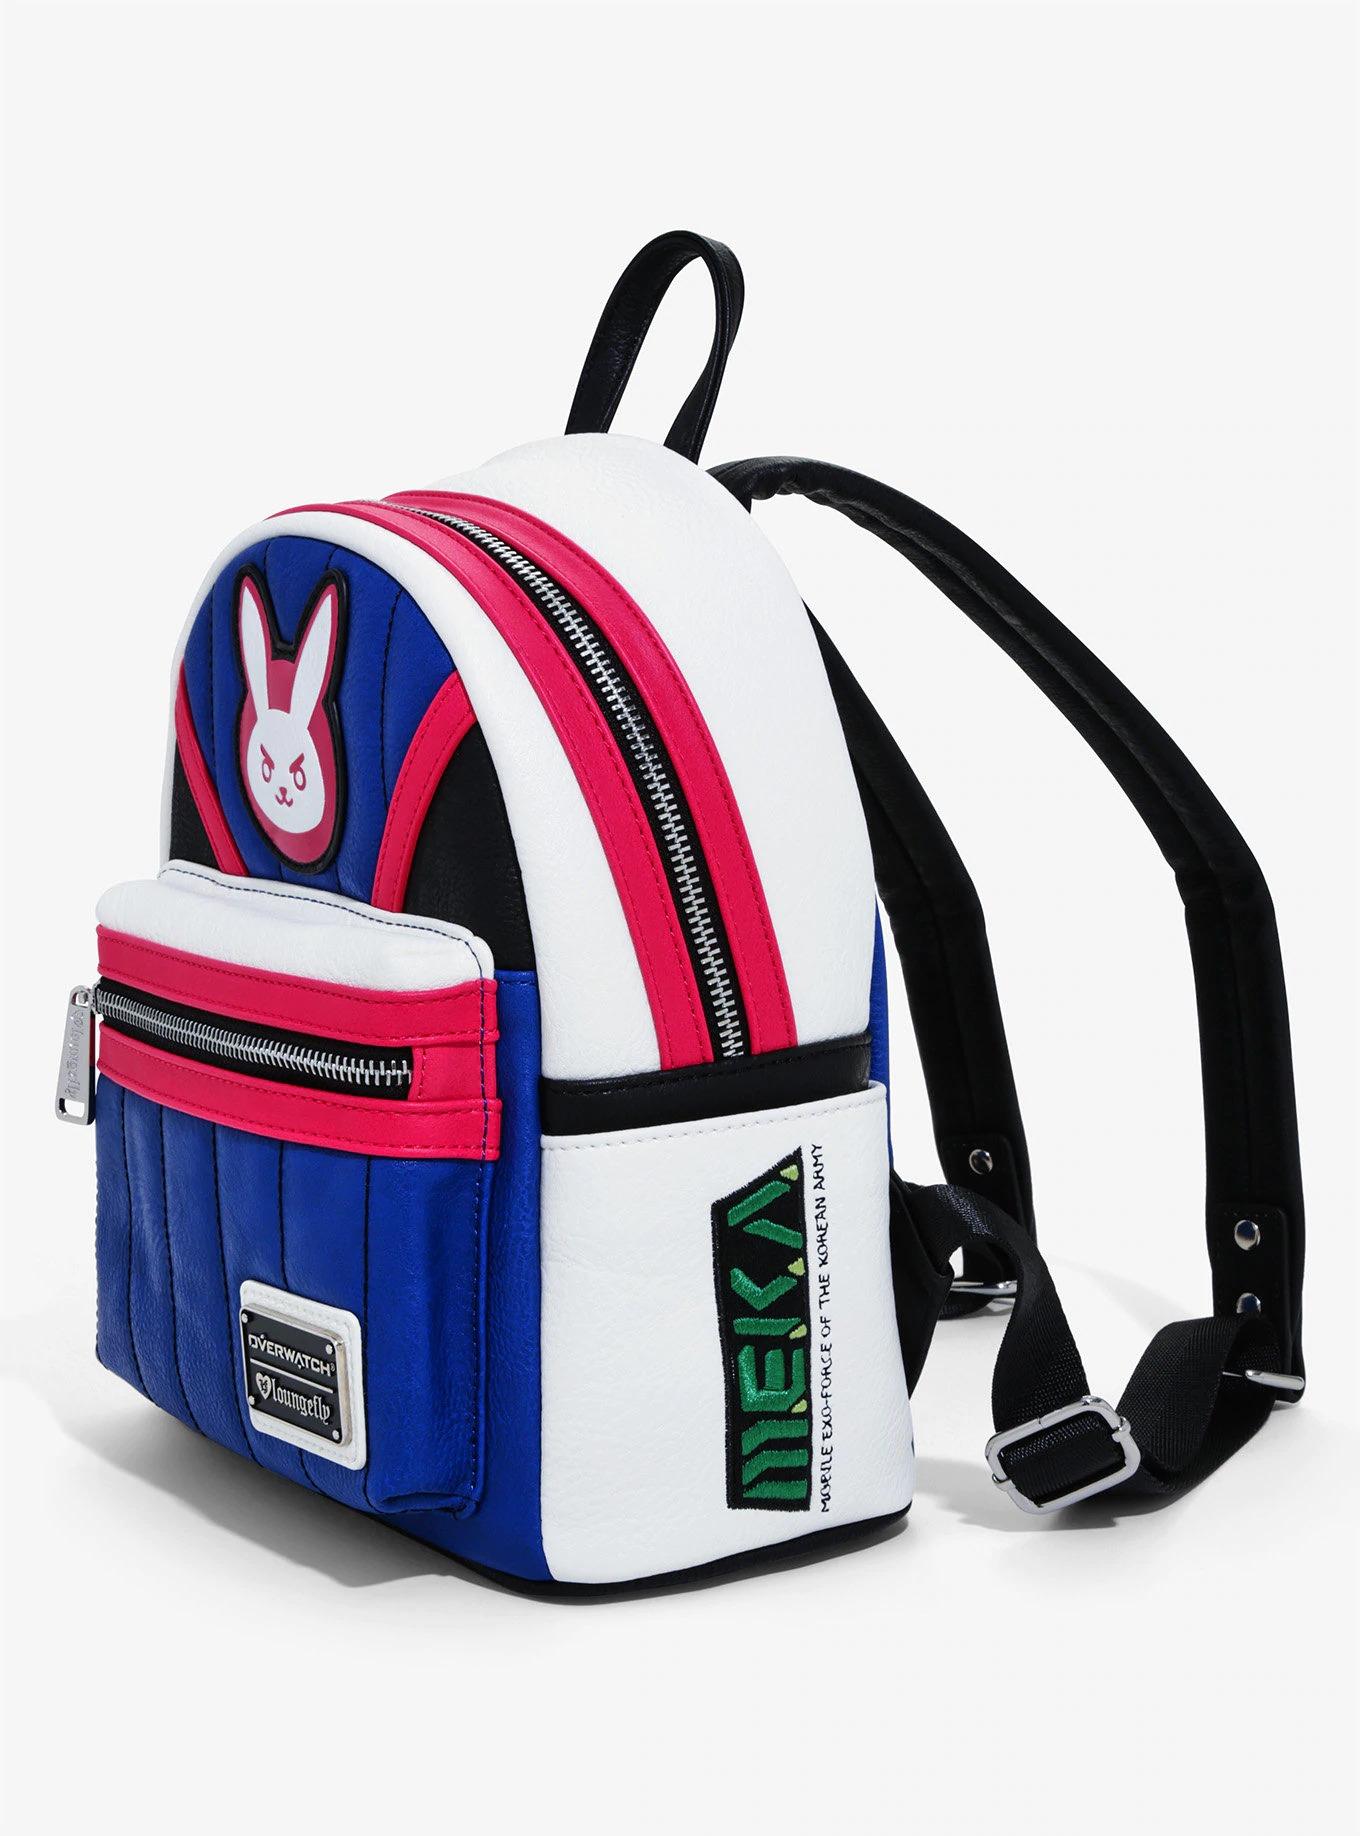 OVERWATCH - D.VA Blue Mini Backpack 'LoungeFly' 